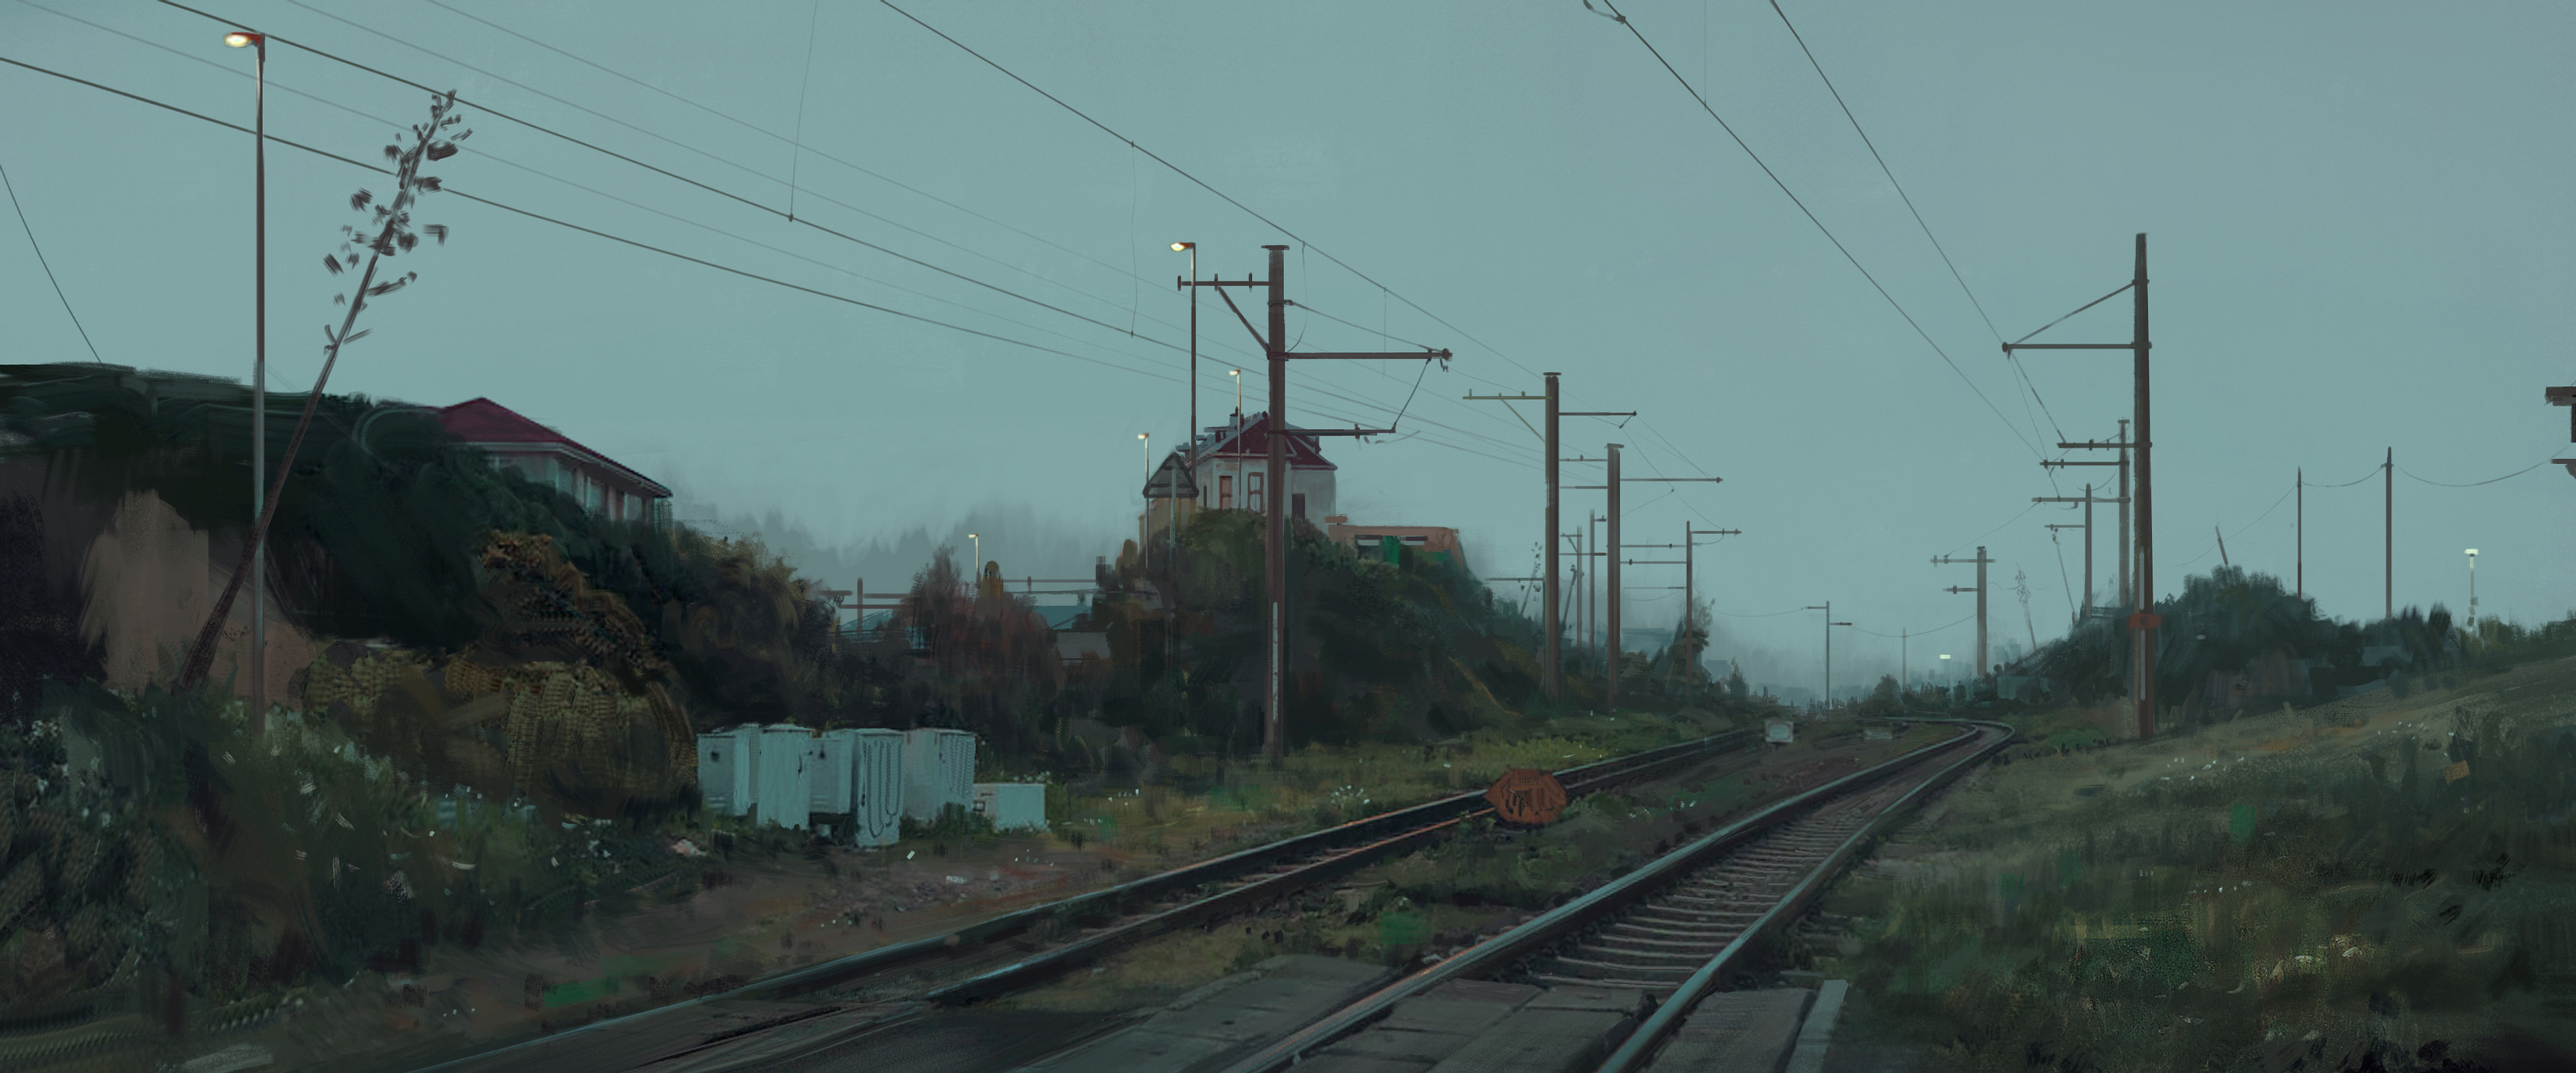 Jonny Sun Digital Art Railway Powerlines Utility Pole House 3840x1600